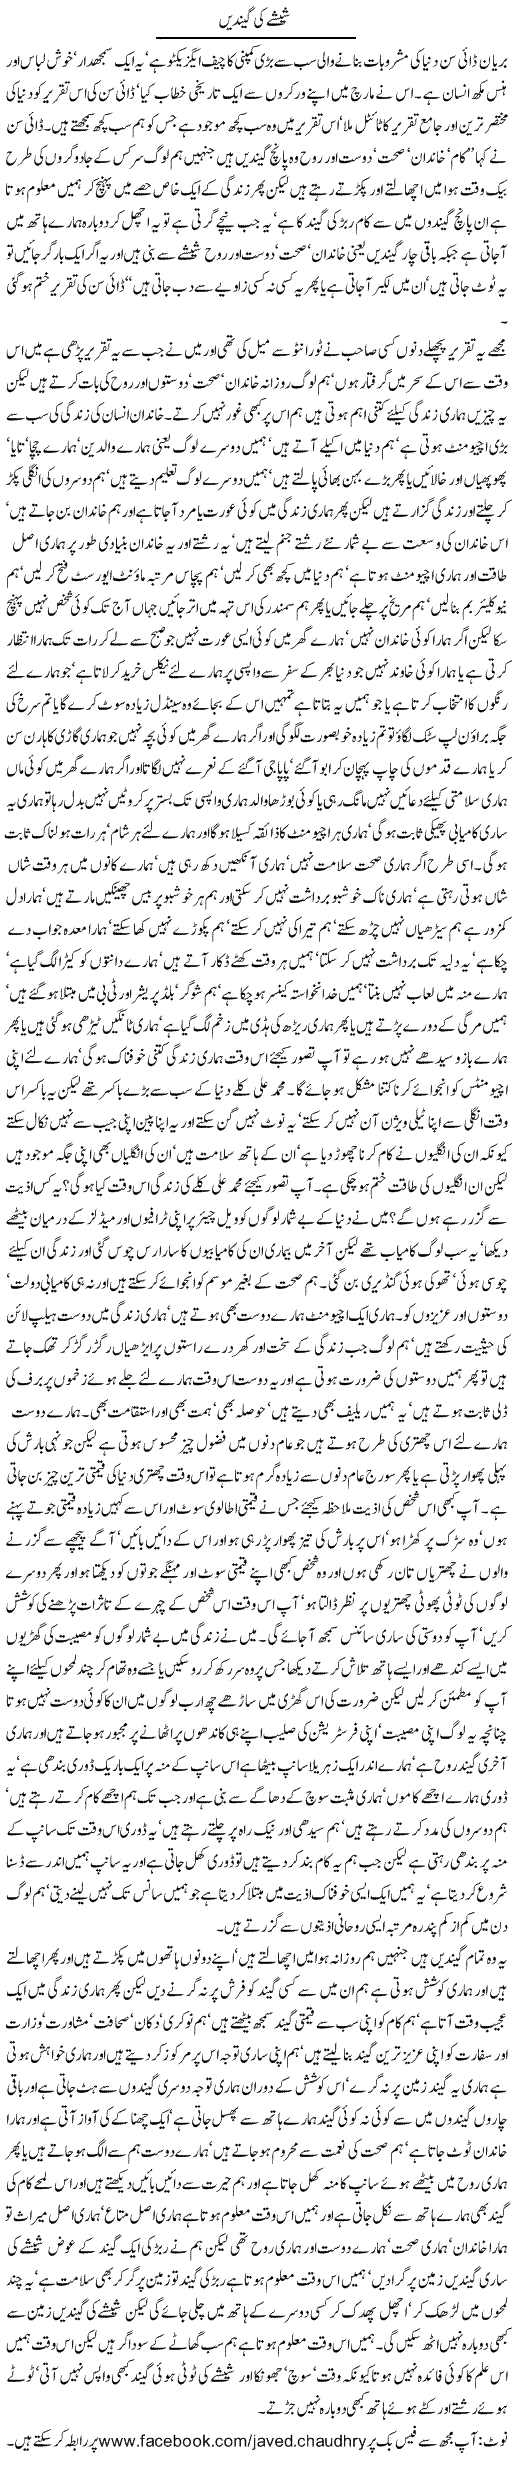 Balls of Mirror - Urdu Political Column By Javed Chaudhry